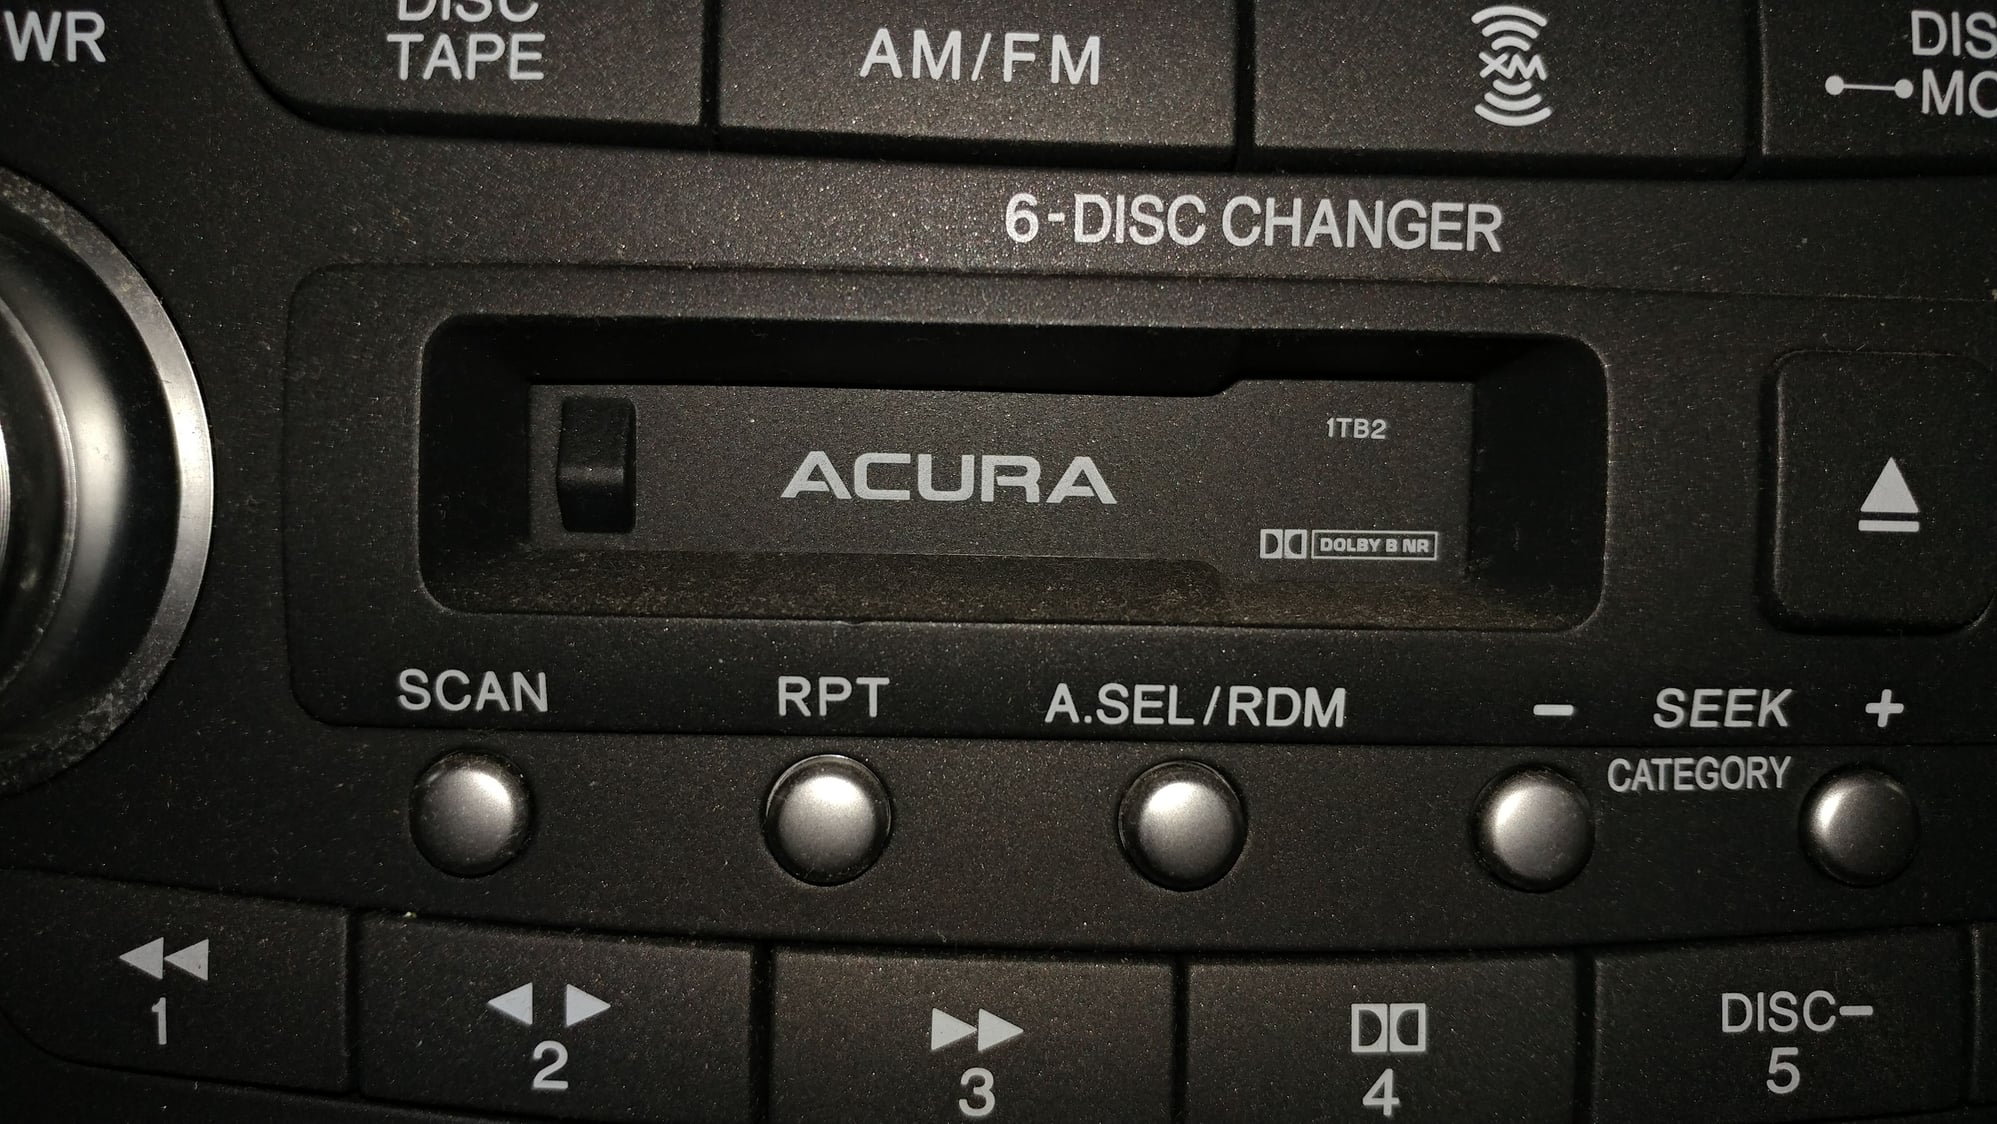 2008 Acura TL - Oem Acura Radio ITB2 - Audio Video/Electronics - $300 - Houston, TX 77053, United States